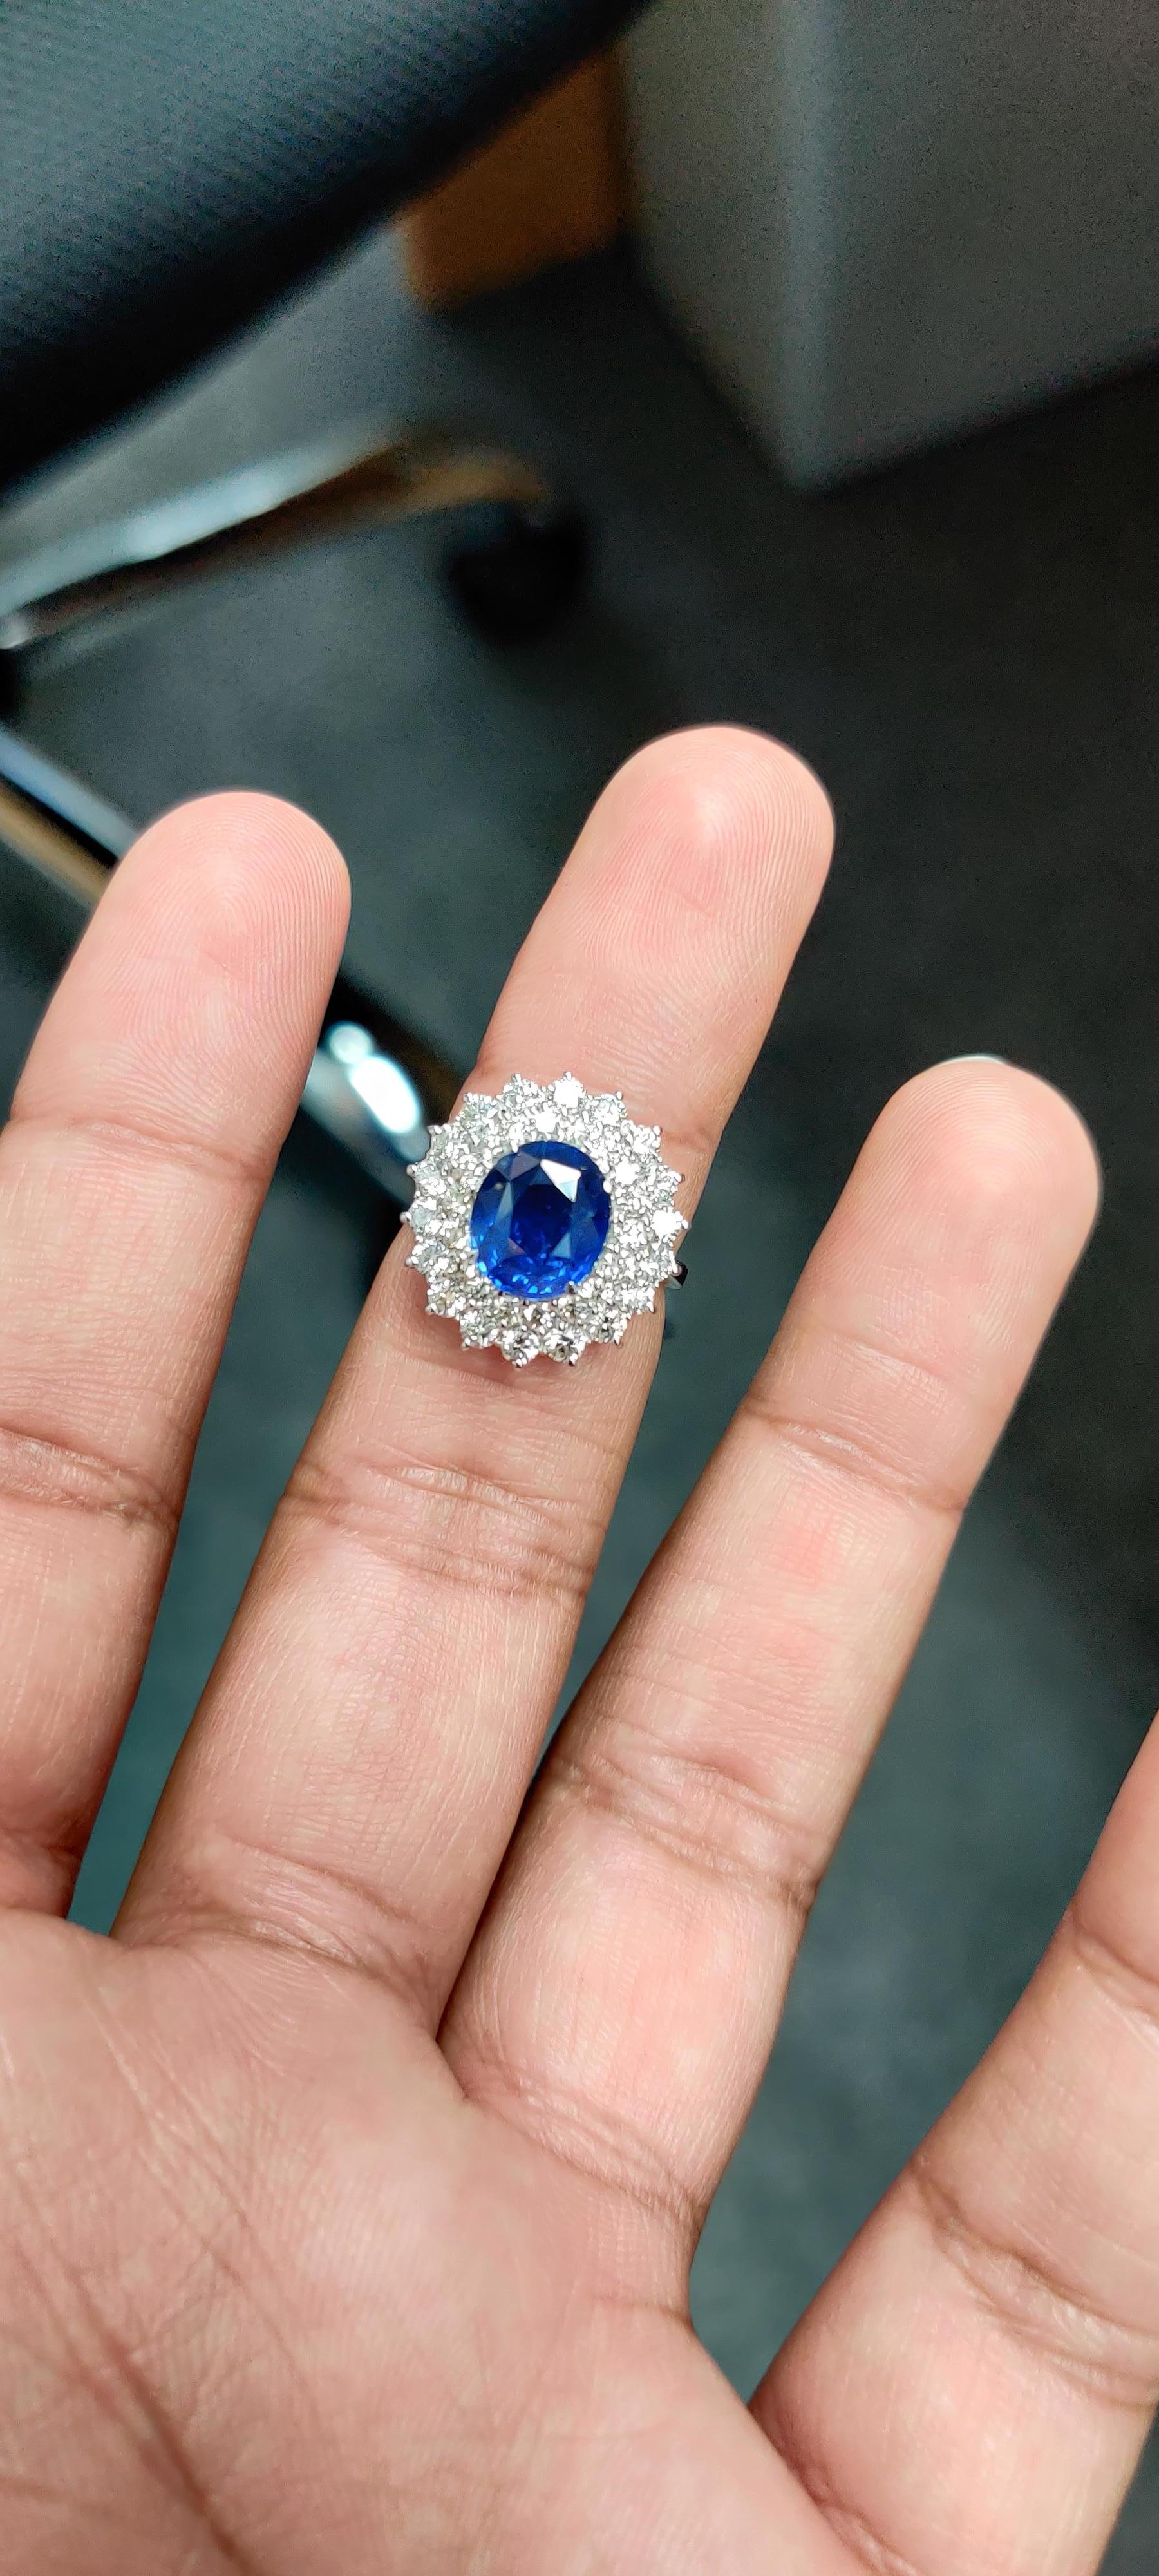 Art Deco 3.74 Carat Sri Lanka Blue Sapphire Diamond Ring in 18K Gold